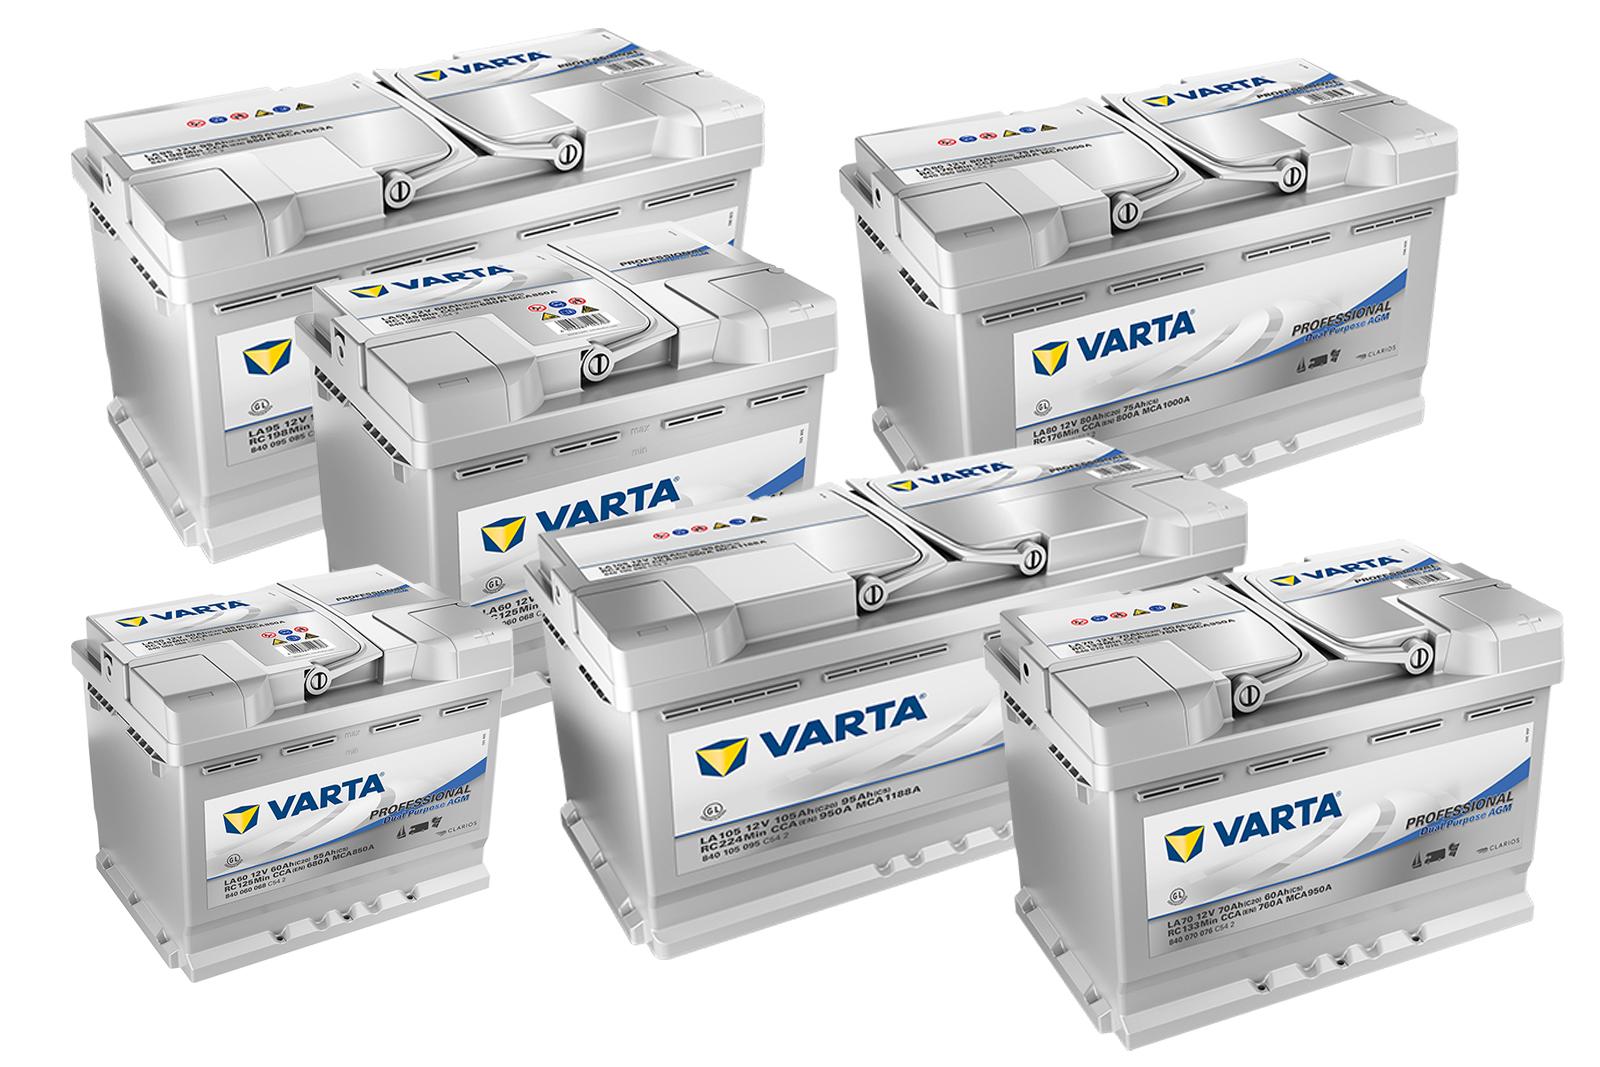 VARTA Professional Dual Purpose AGM